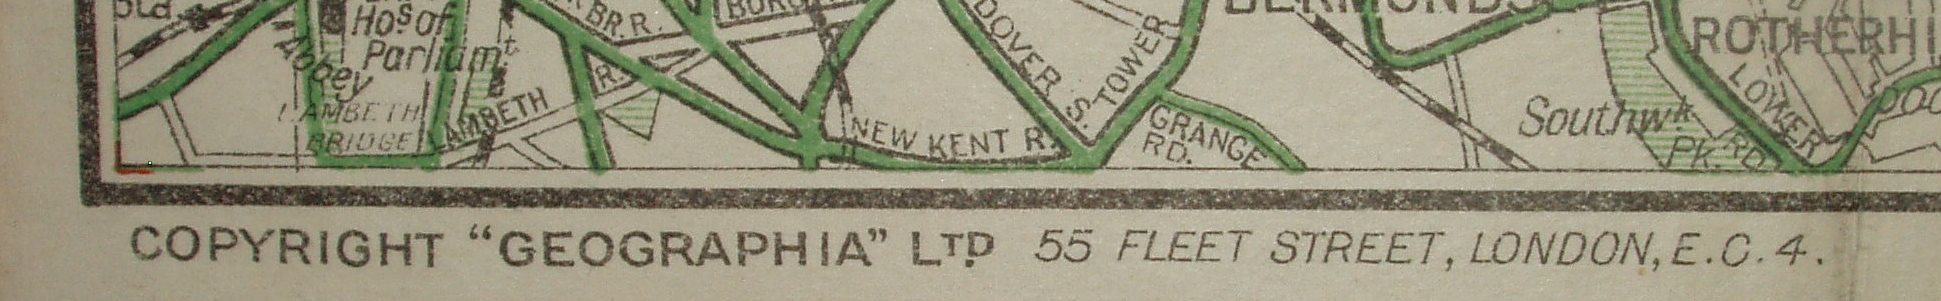 Geographia Ramblers Map, 1937 address